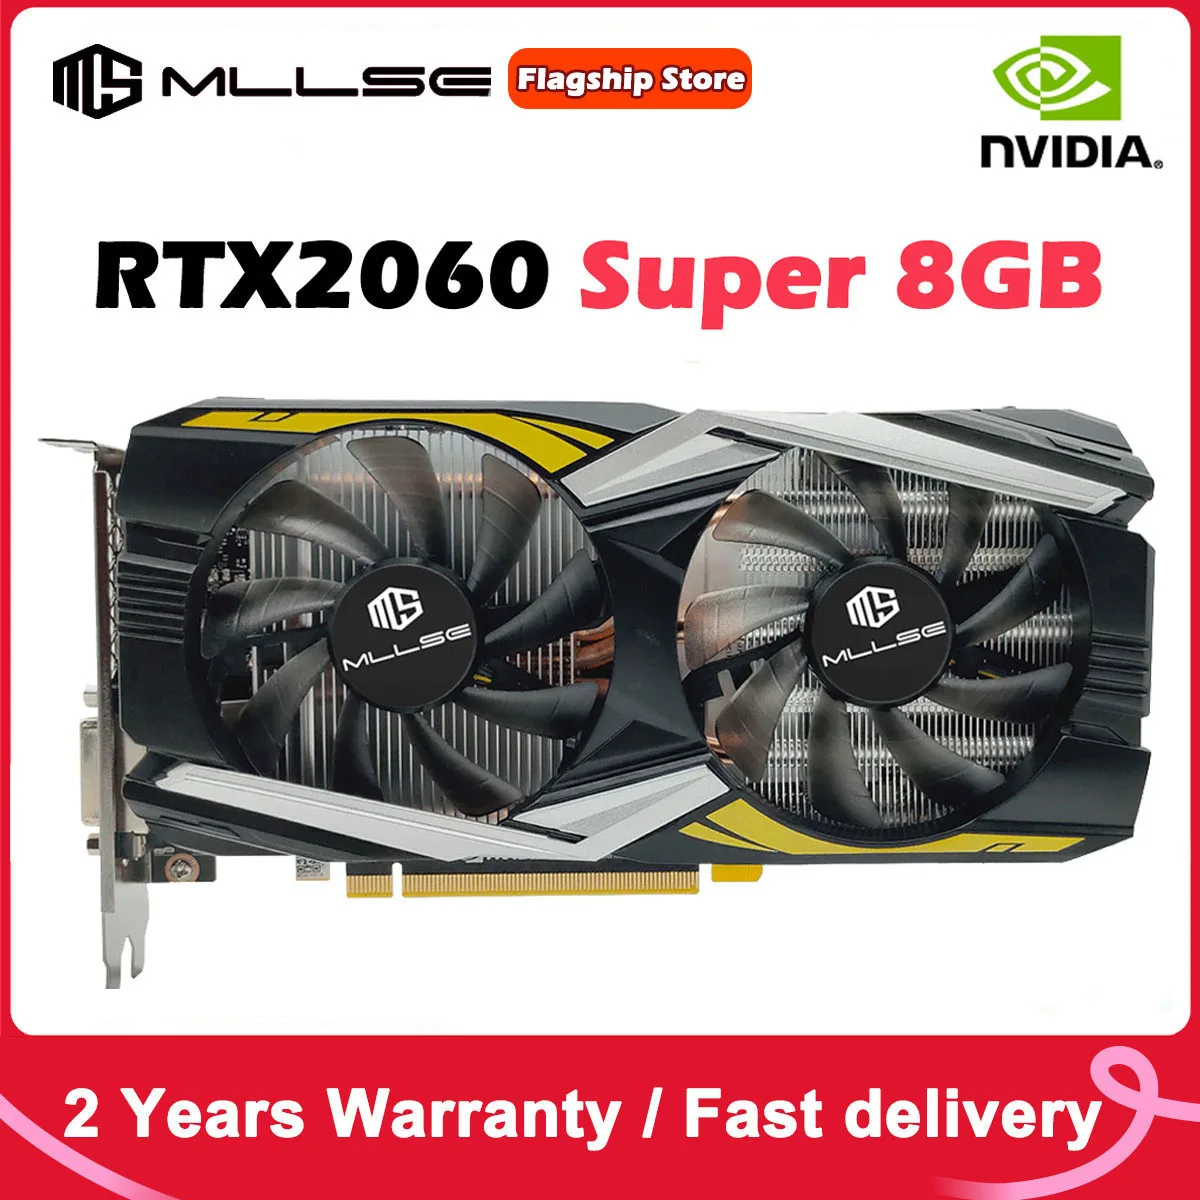 

Mllse 100% New RTX 2060 Super 8GB Game Graphics Card GDDR6 256Bit PCI Express 3.0x16 1470MHz rtx 2060super Gaming 8G Video Card